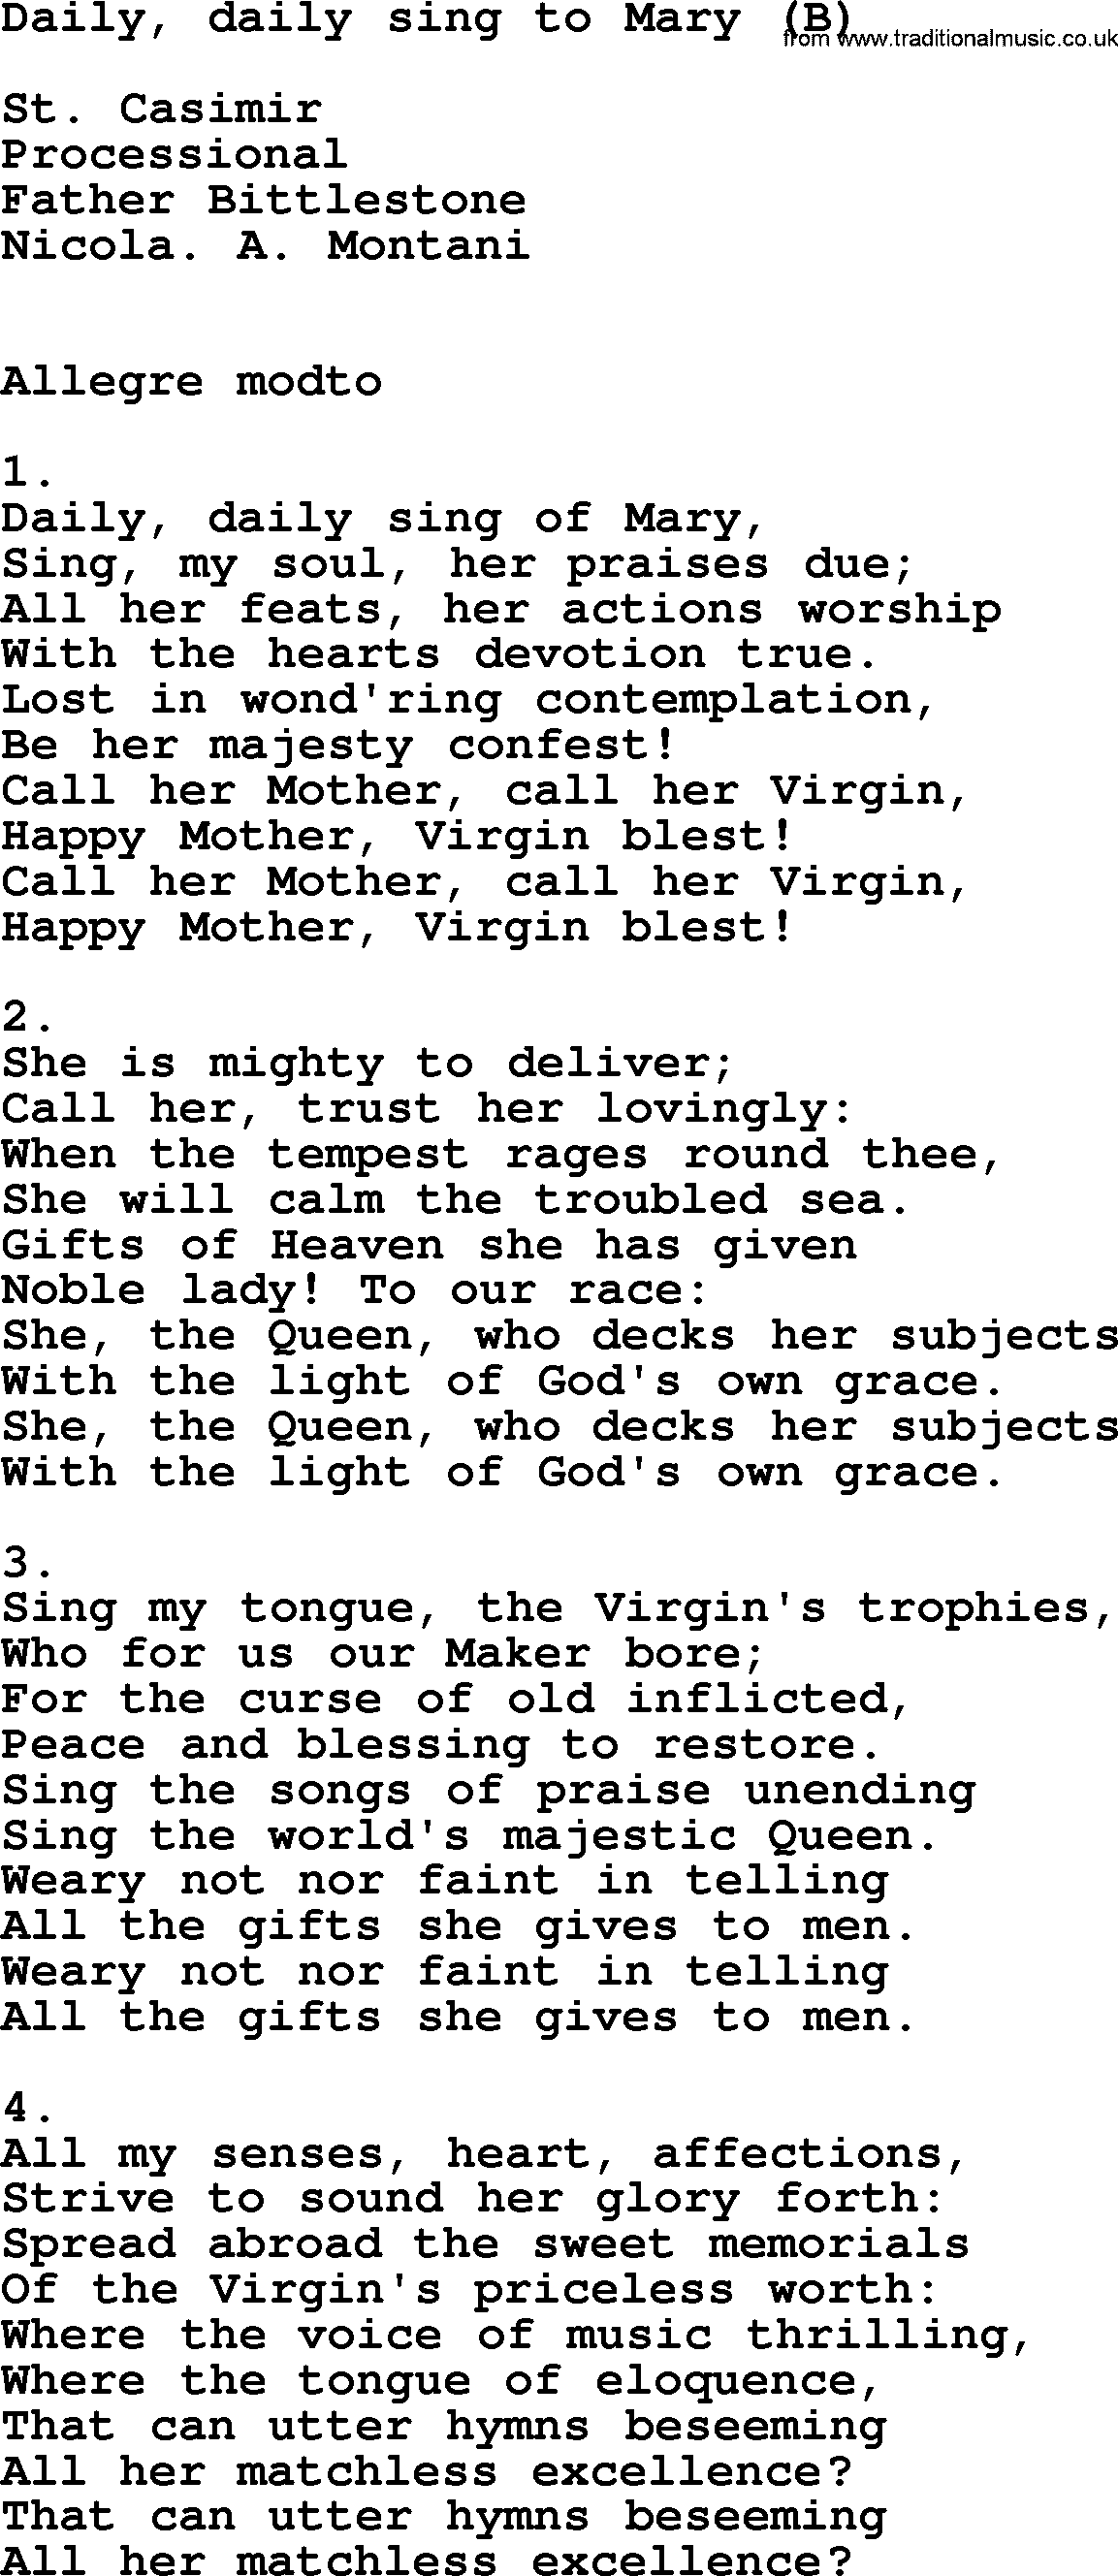 Catholic Hymn: Daily, Daily Sing To Mary2 lyrics with PDF